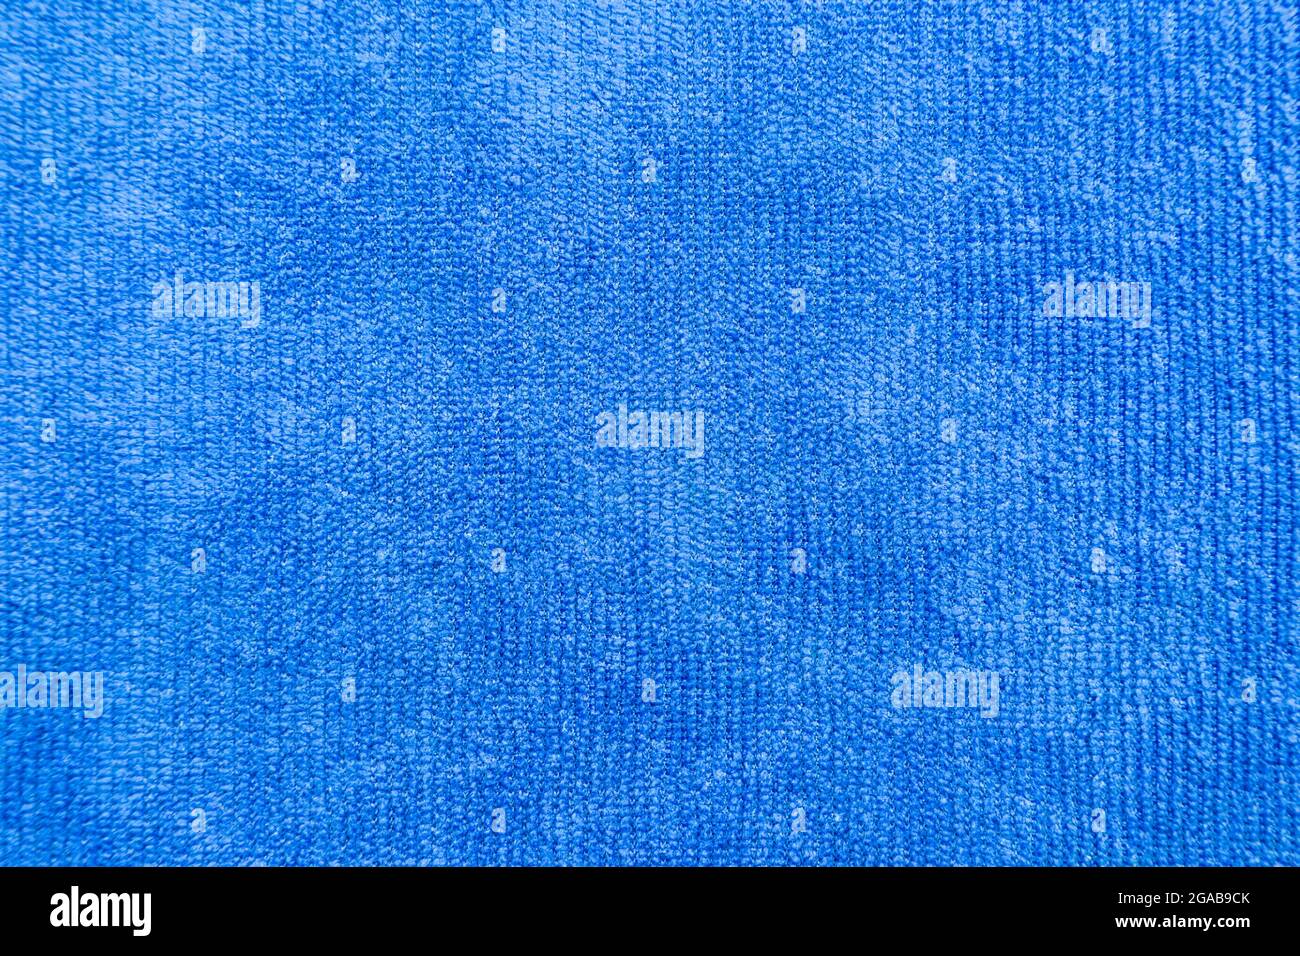 blue micro fiber fabric texture background Stock Photo